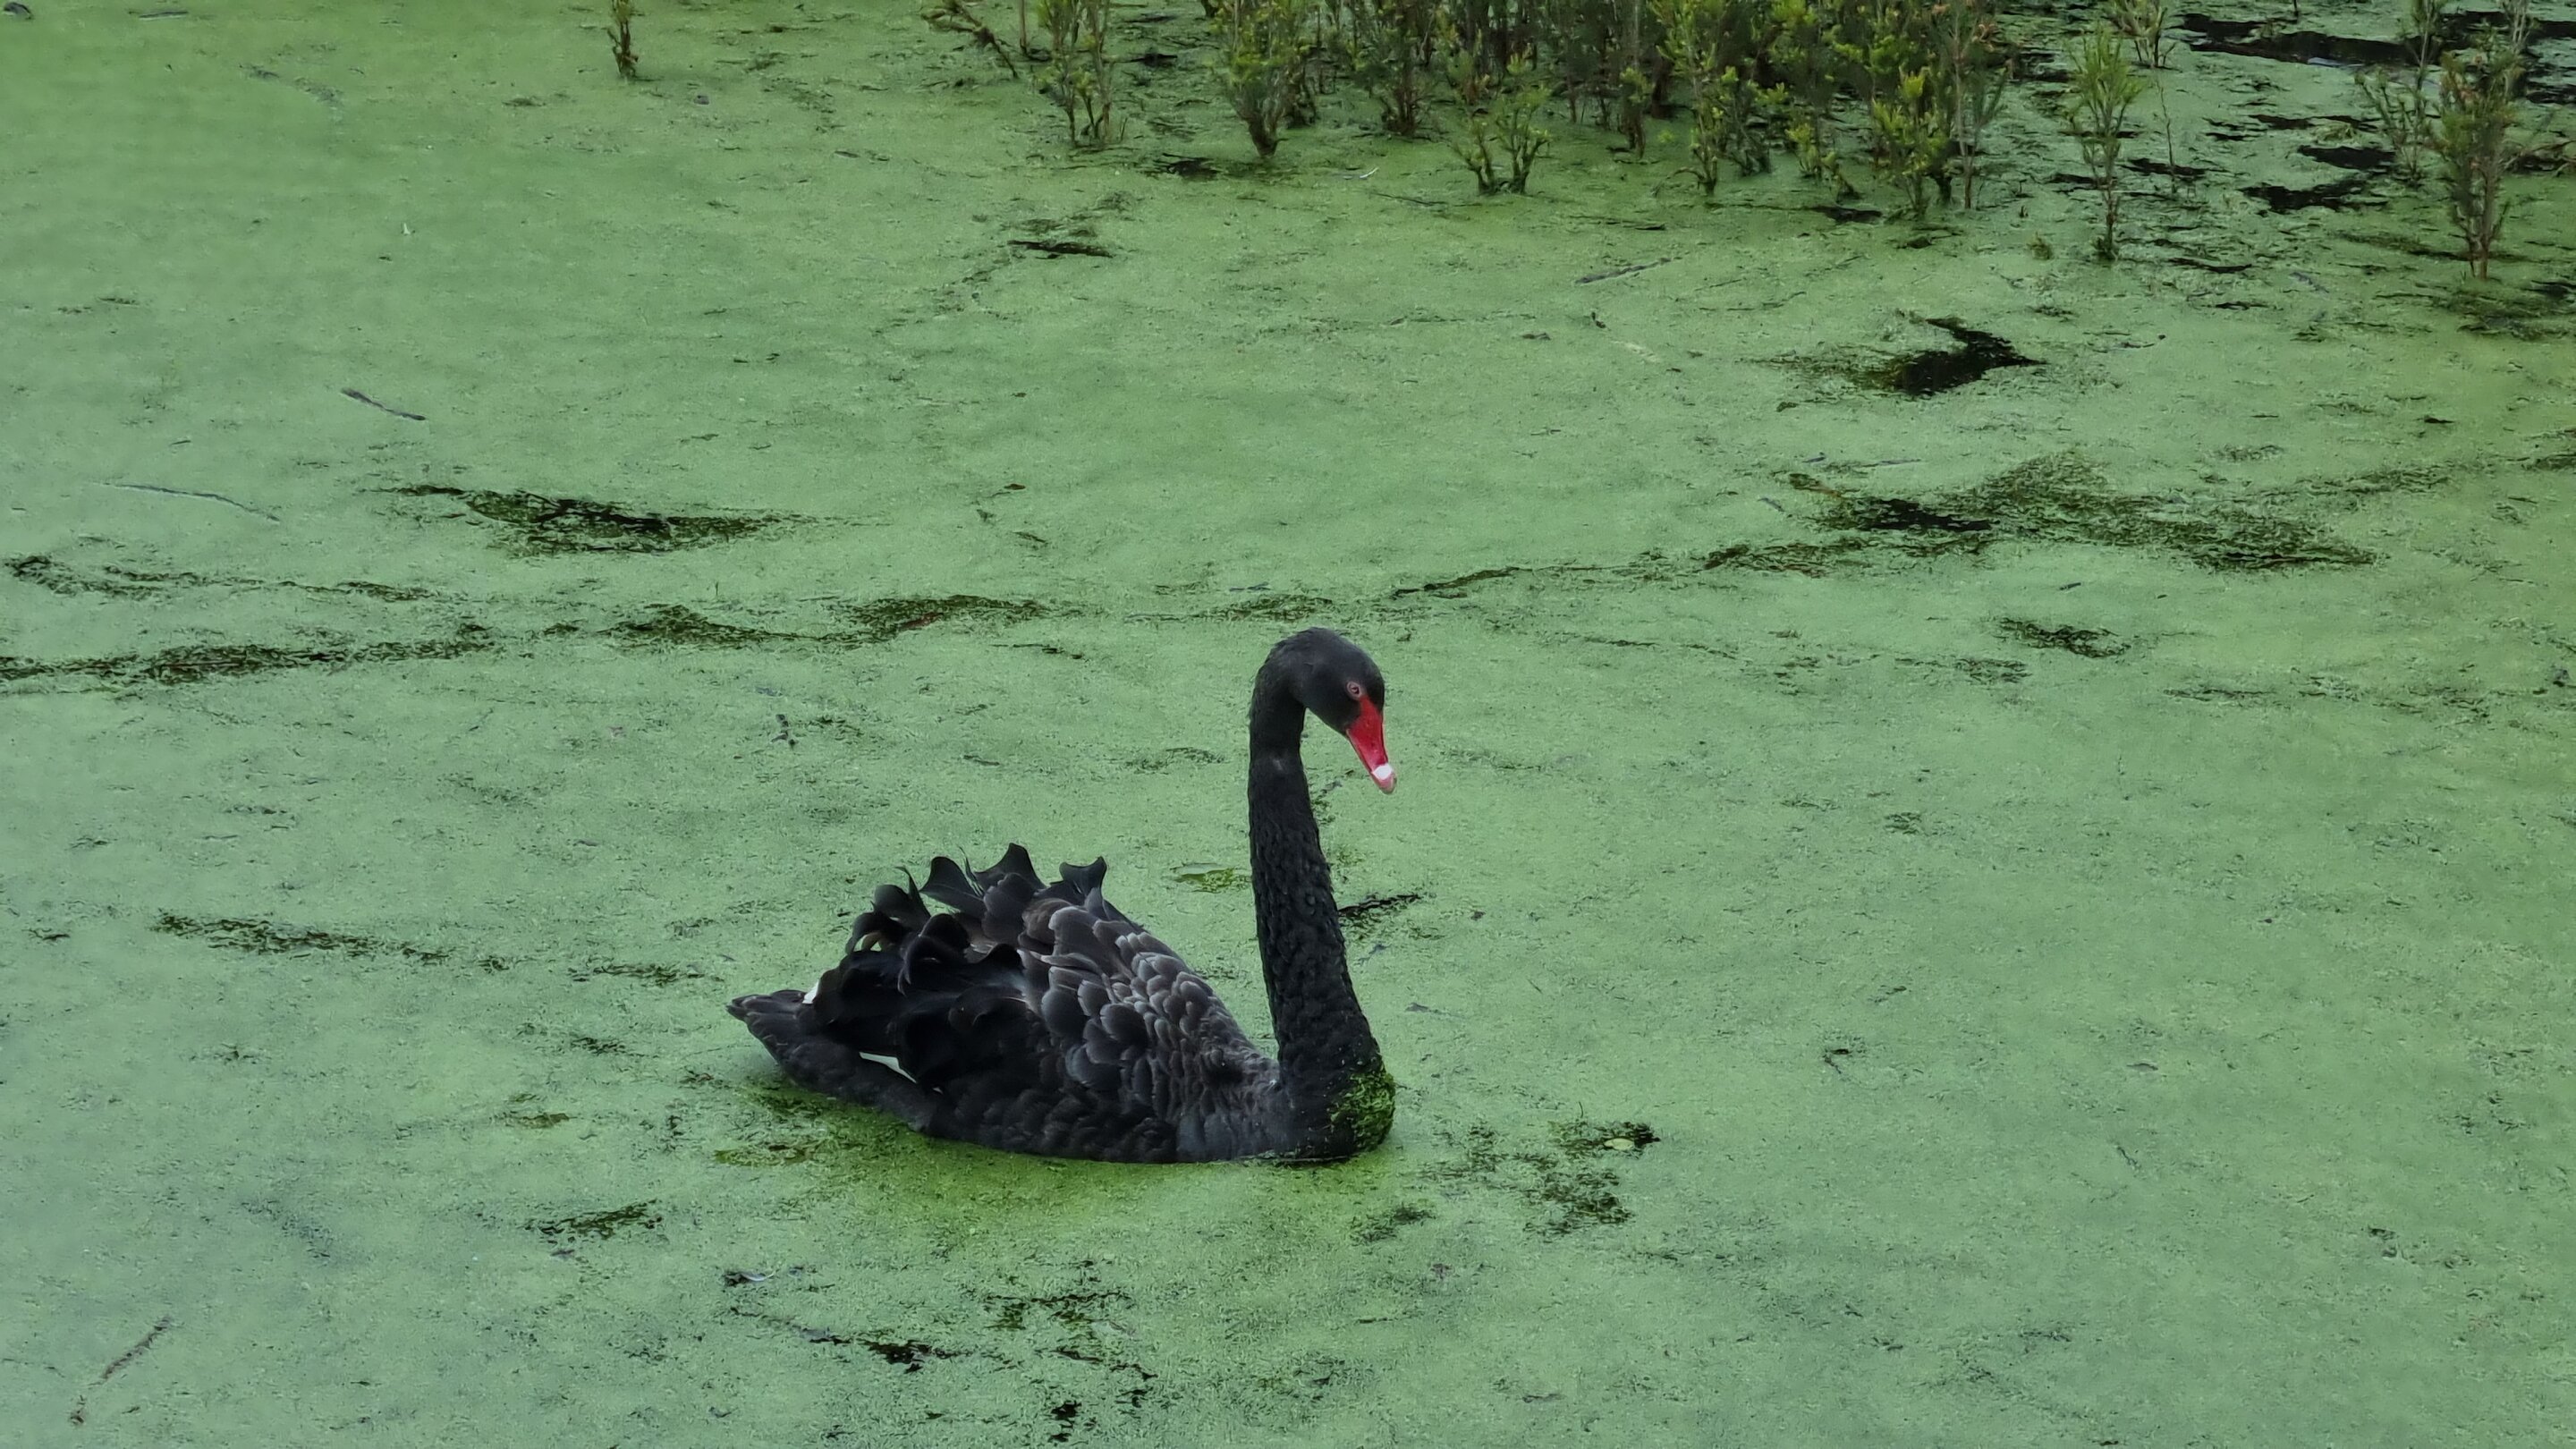 Avian flu could decimate Australian black swans